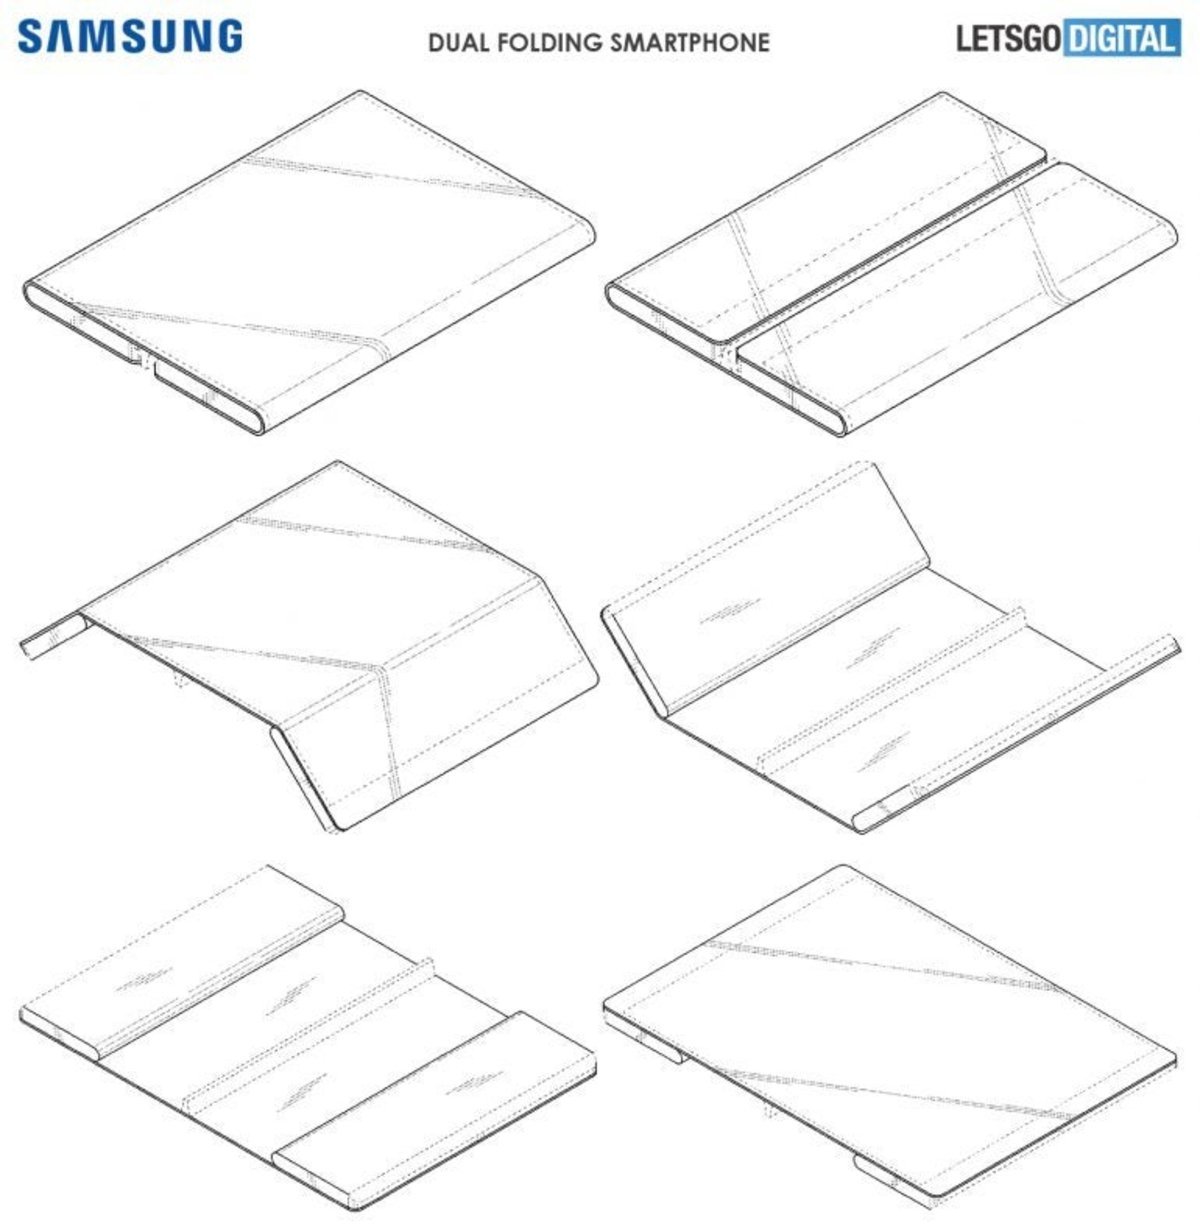 Samsung patente smartphone plegable doble pantalla